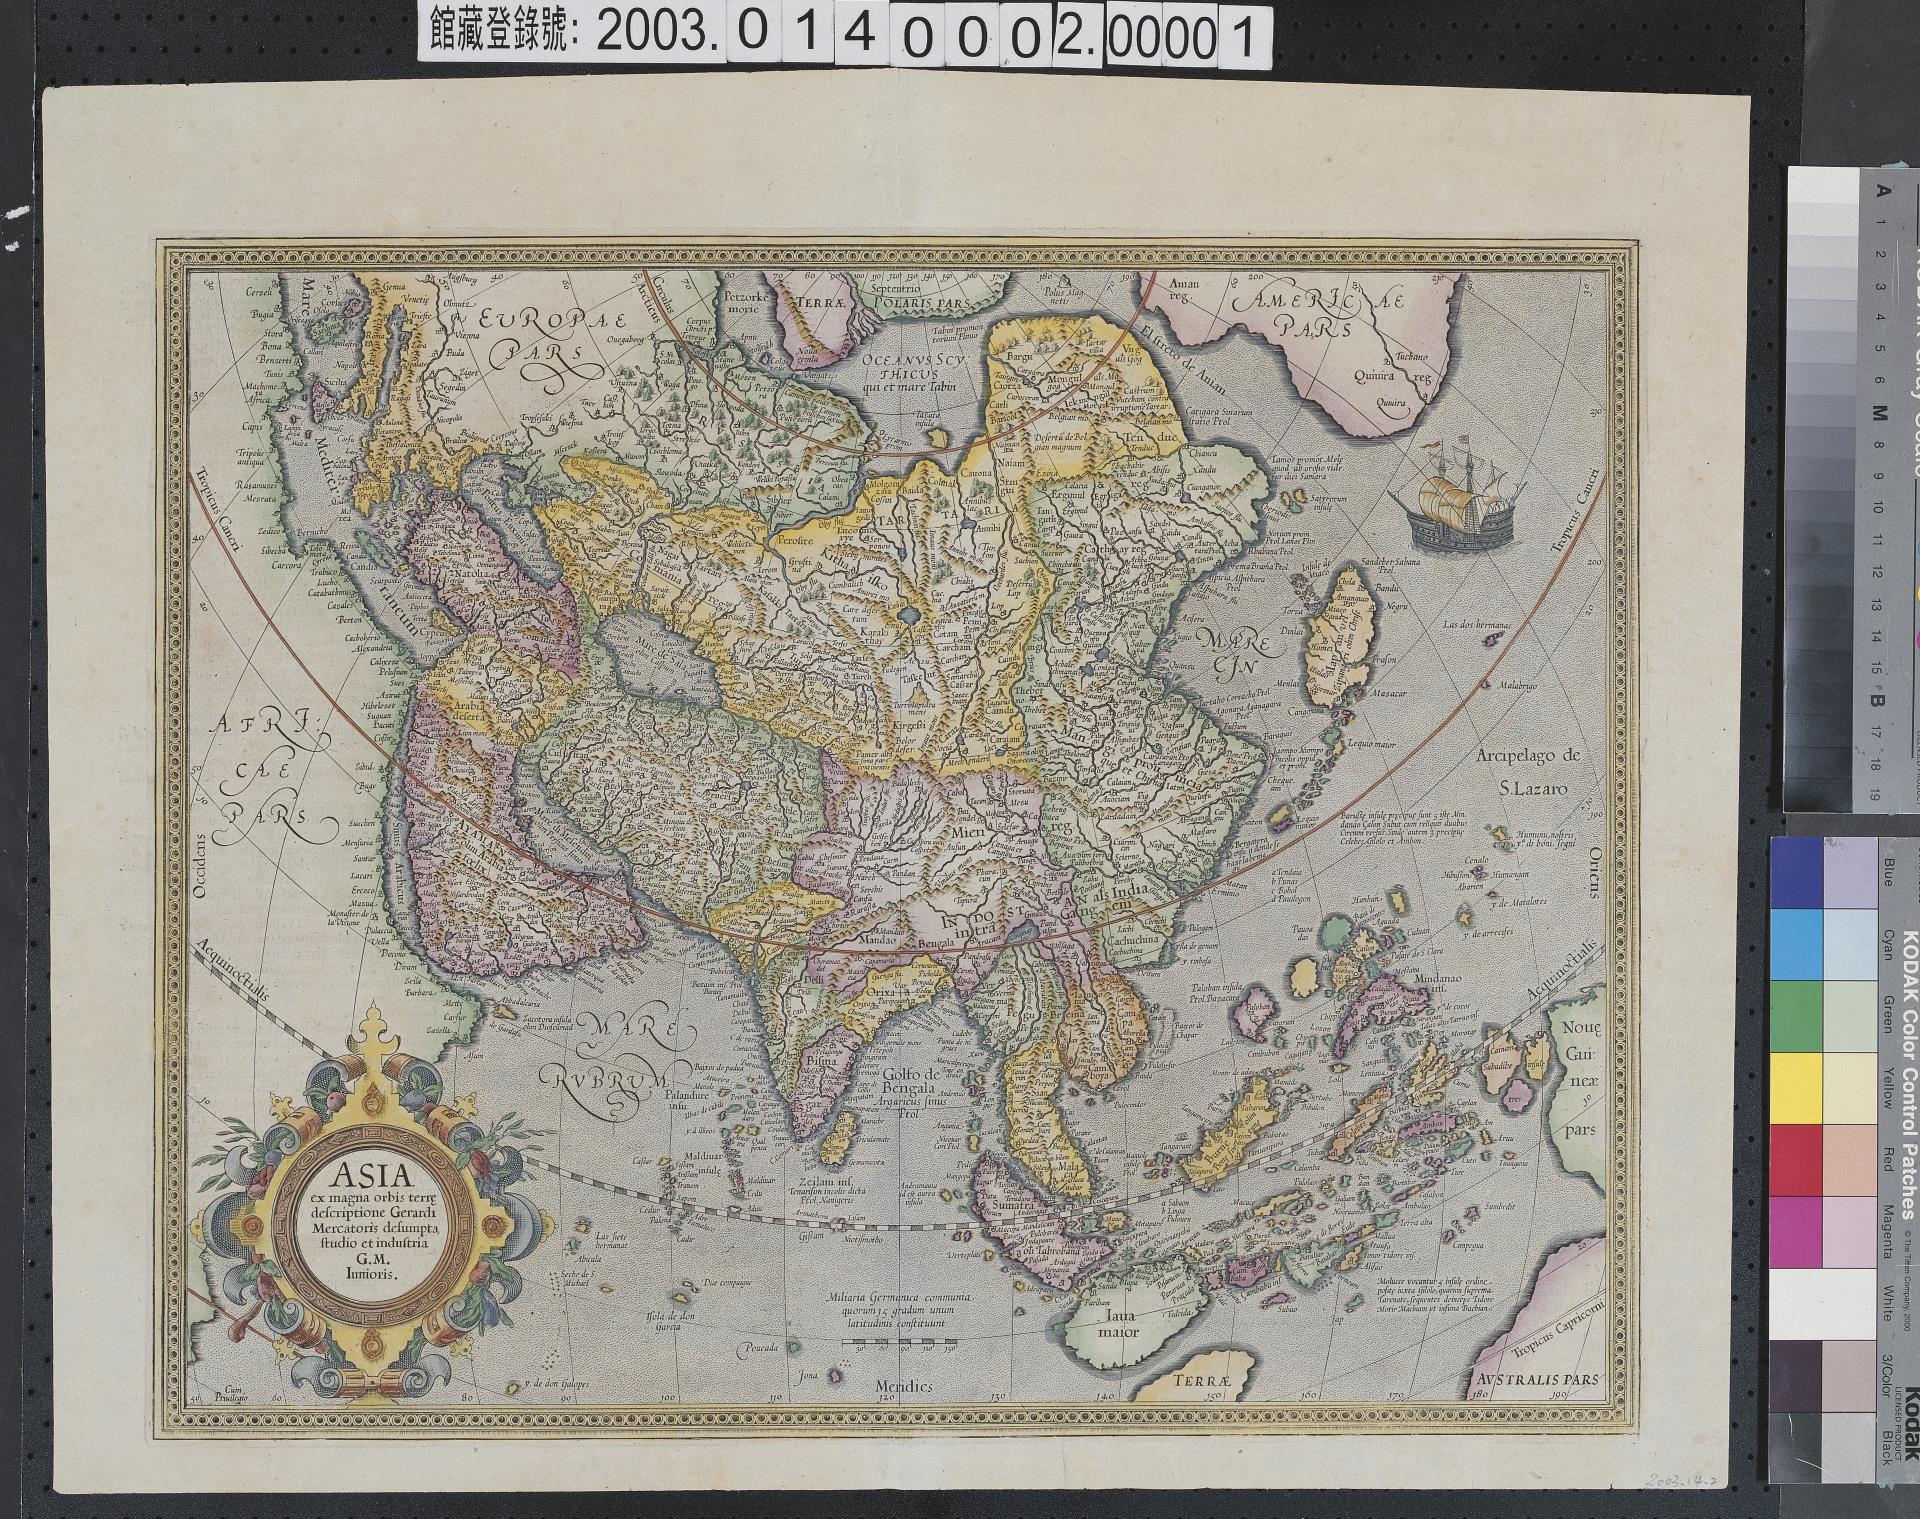 Gerard Mercator〈亞洲圖〉 (共2張)